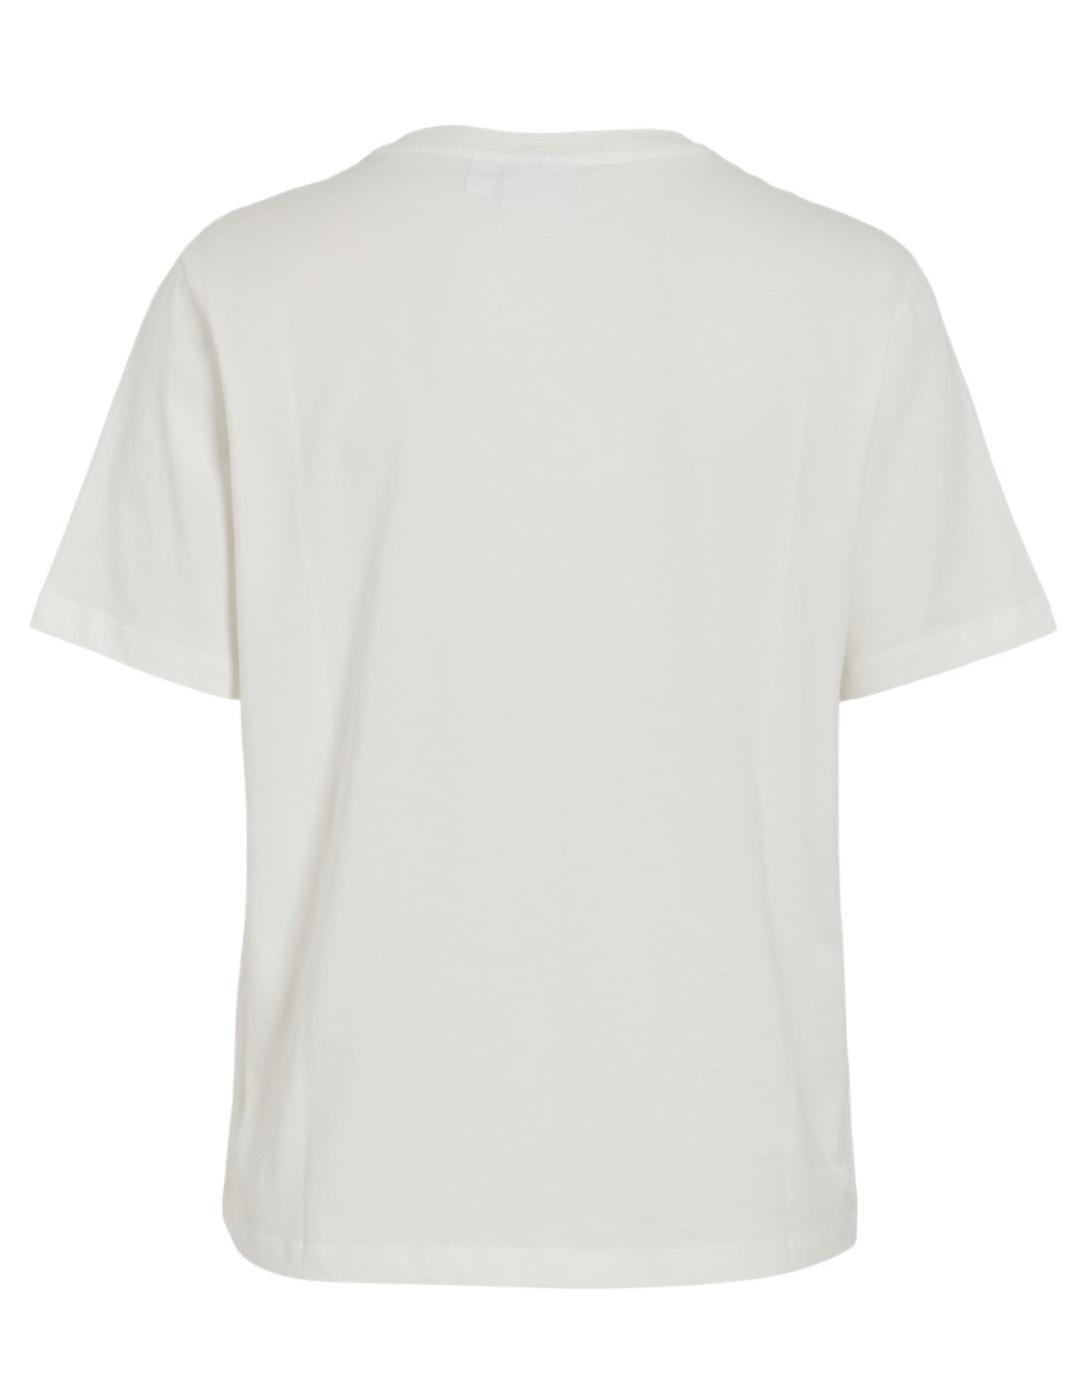 Camiseta Vila Sybil blanca dibujo manga corta de mujer